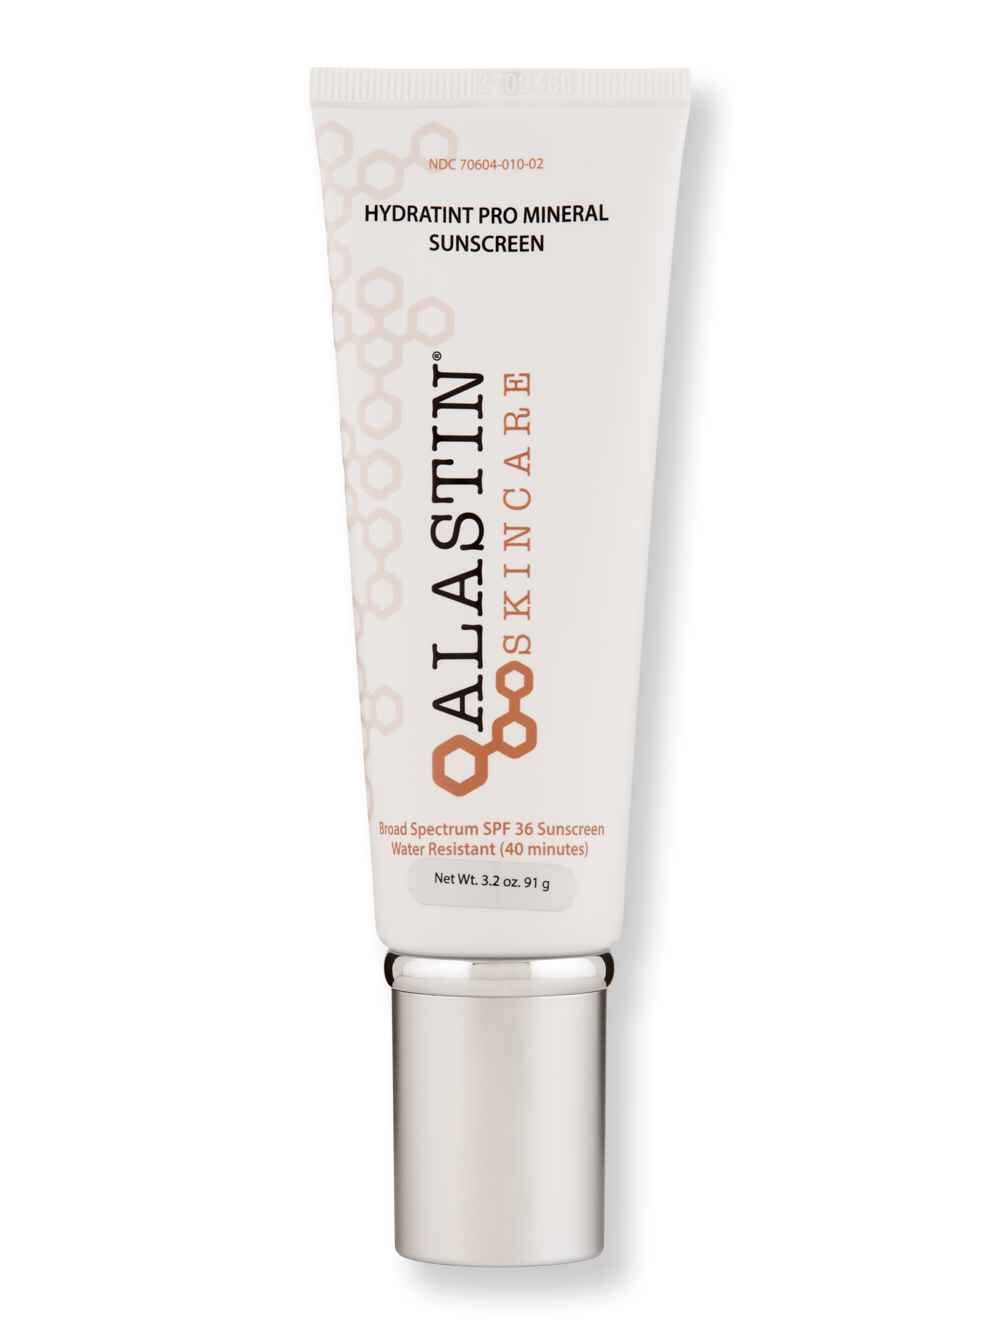 ALASTIN ALASTIN HydraTint Pro Mineral Sunscreen SPF 36 3.2 oz Body Sunscreens 